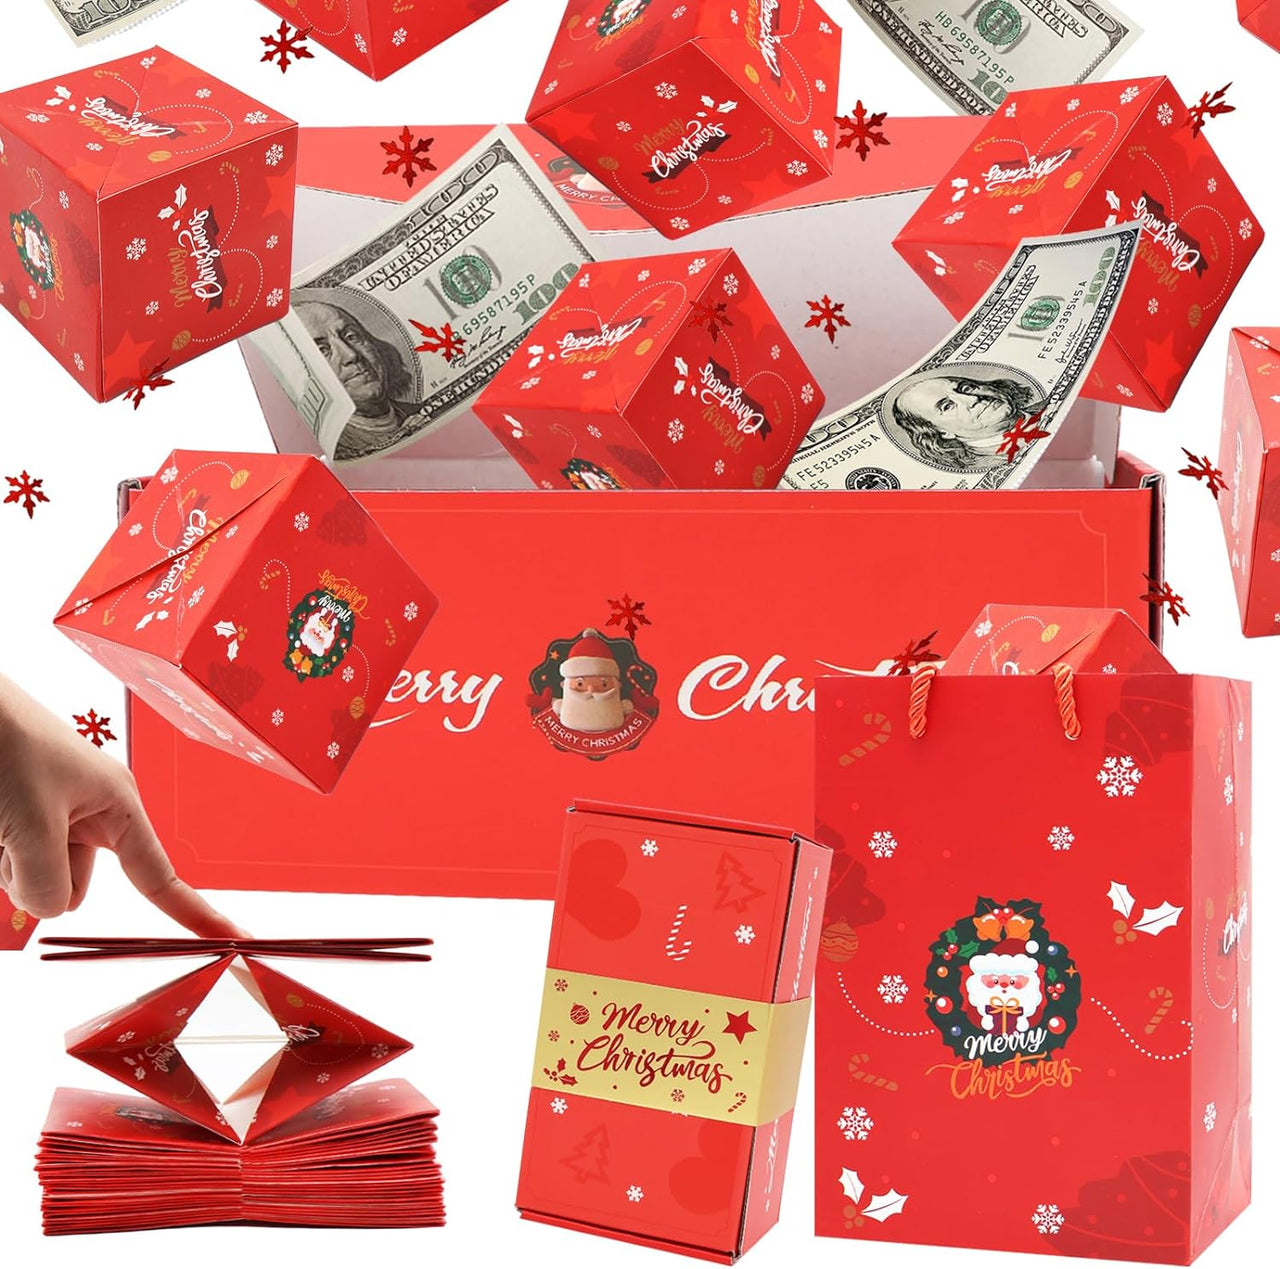 Surprise Money Gift Box Explosion